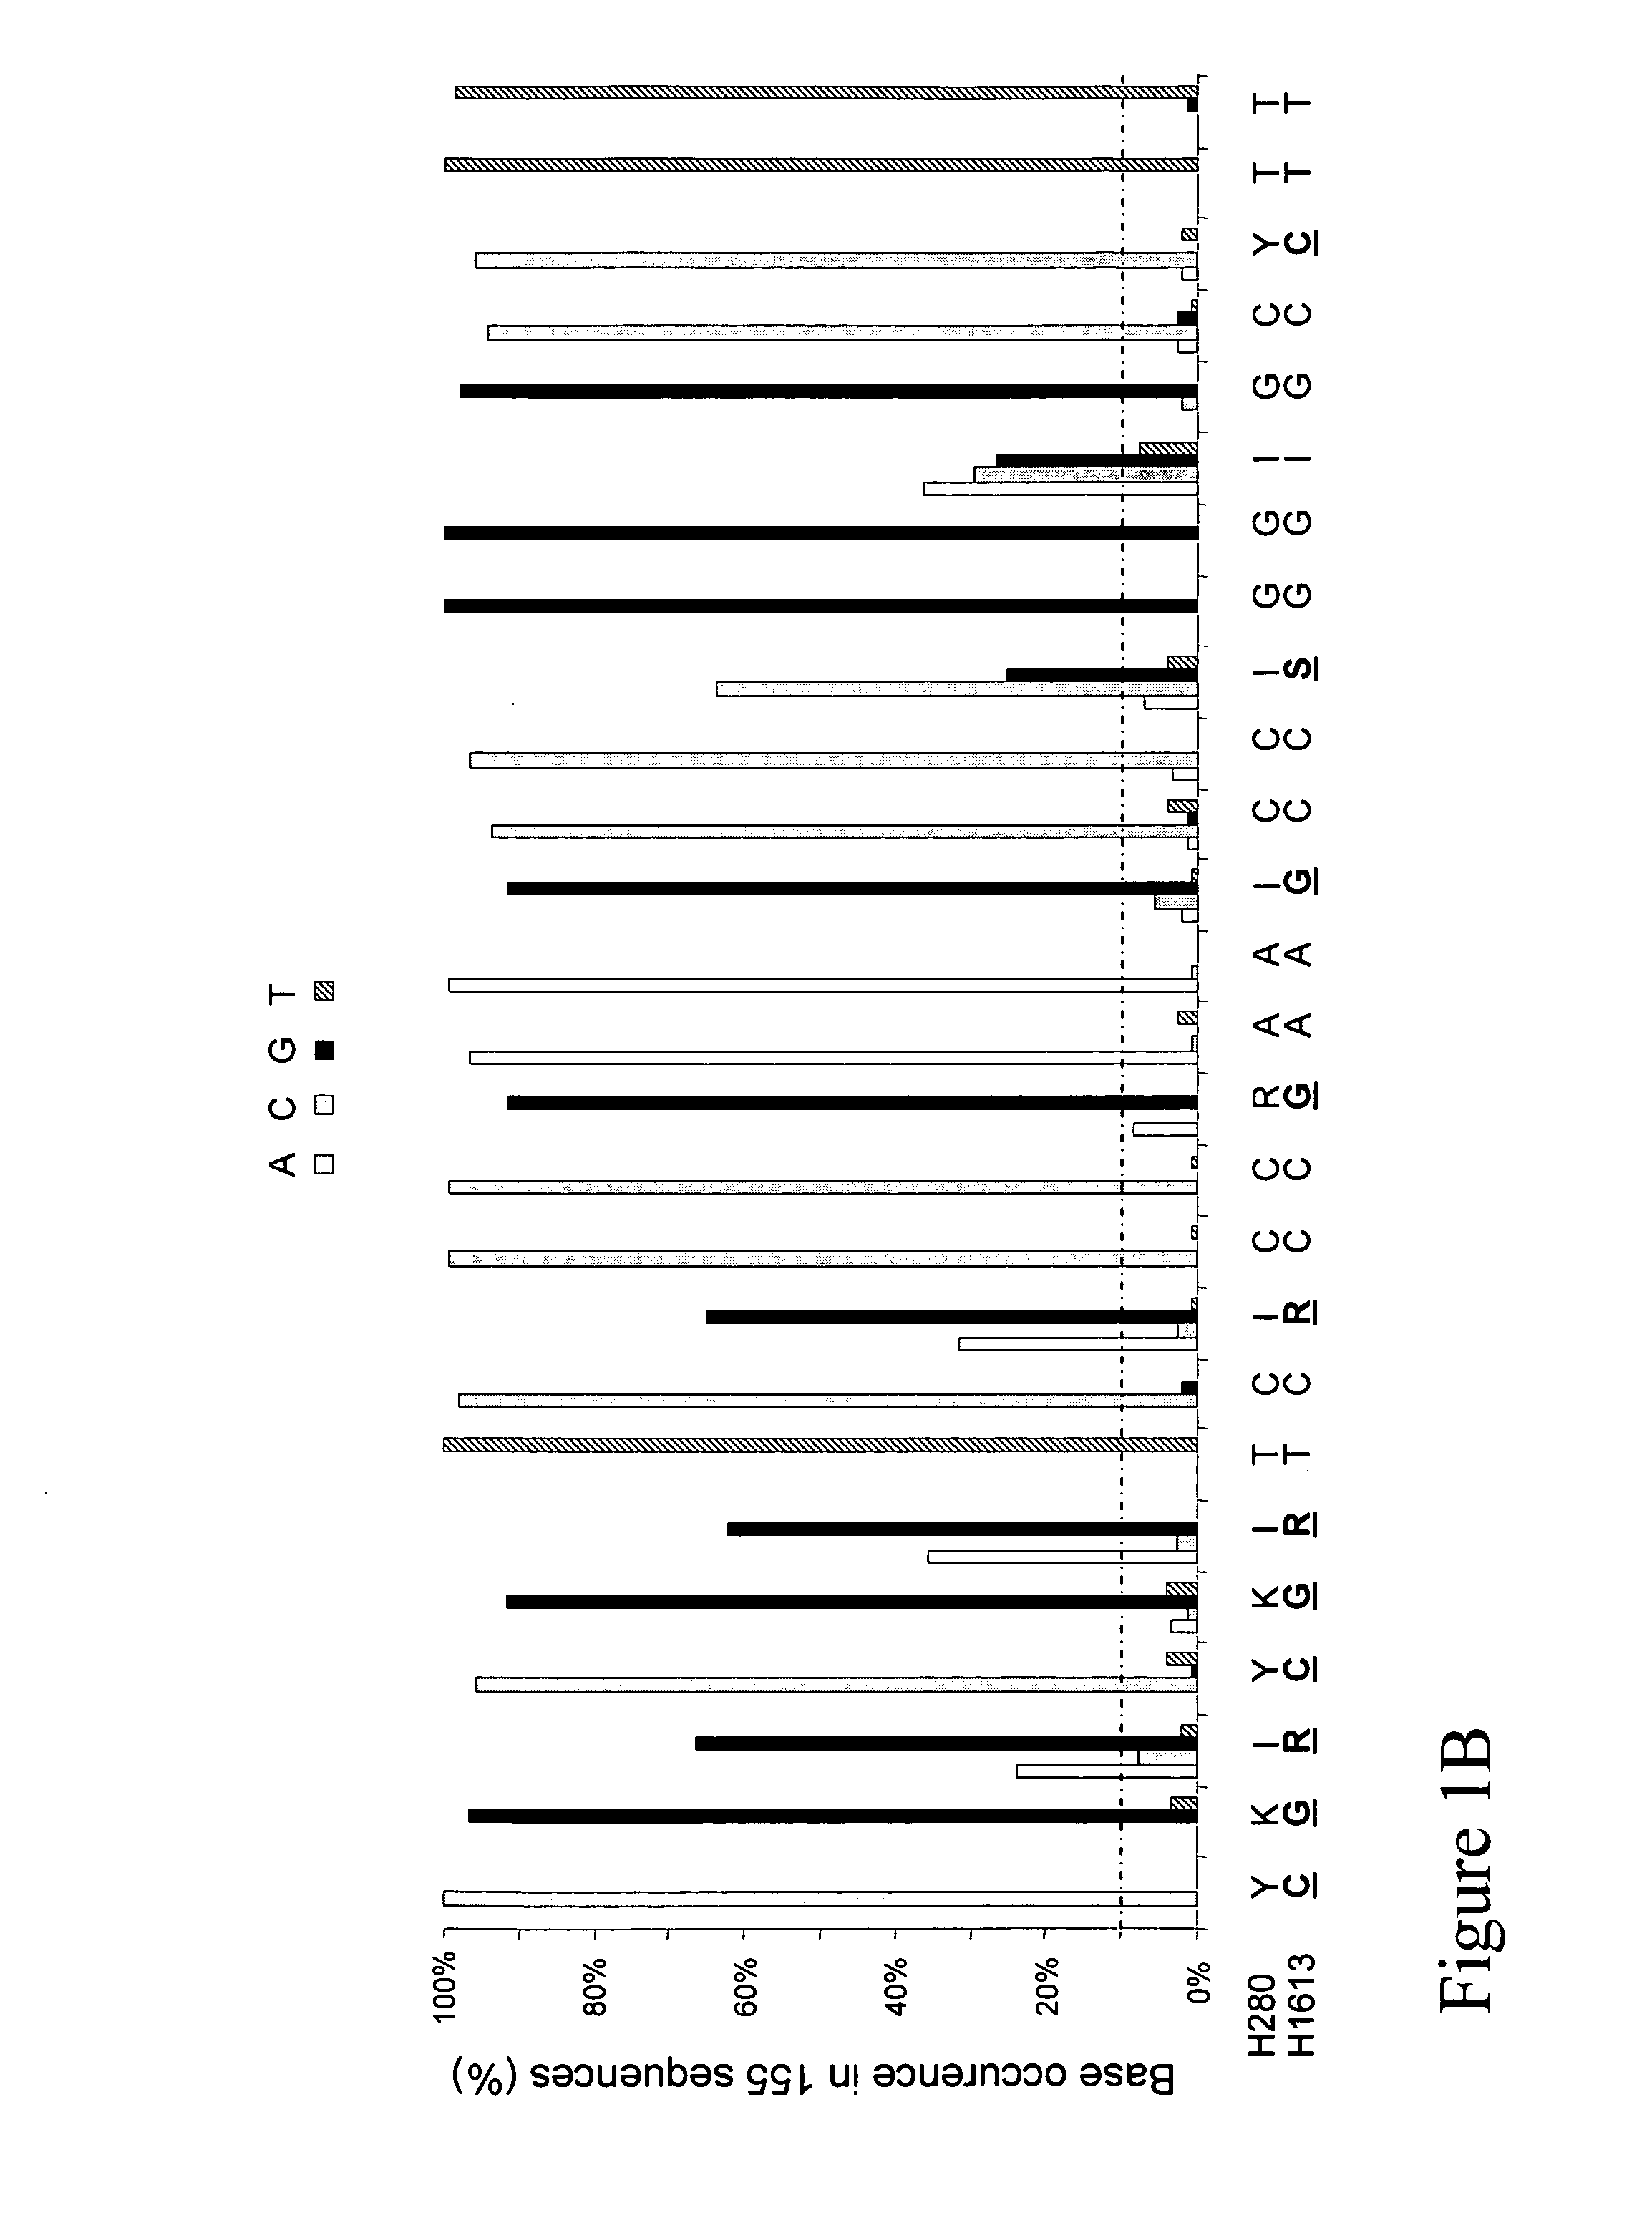 Strong PCR primers and primer cocktails